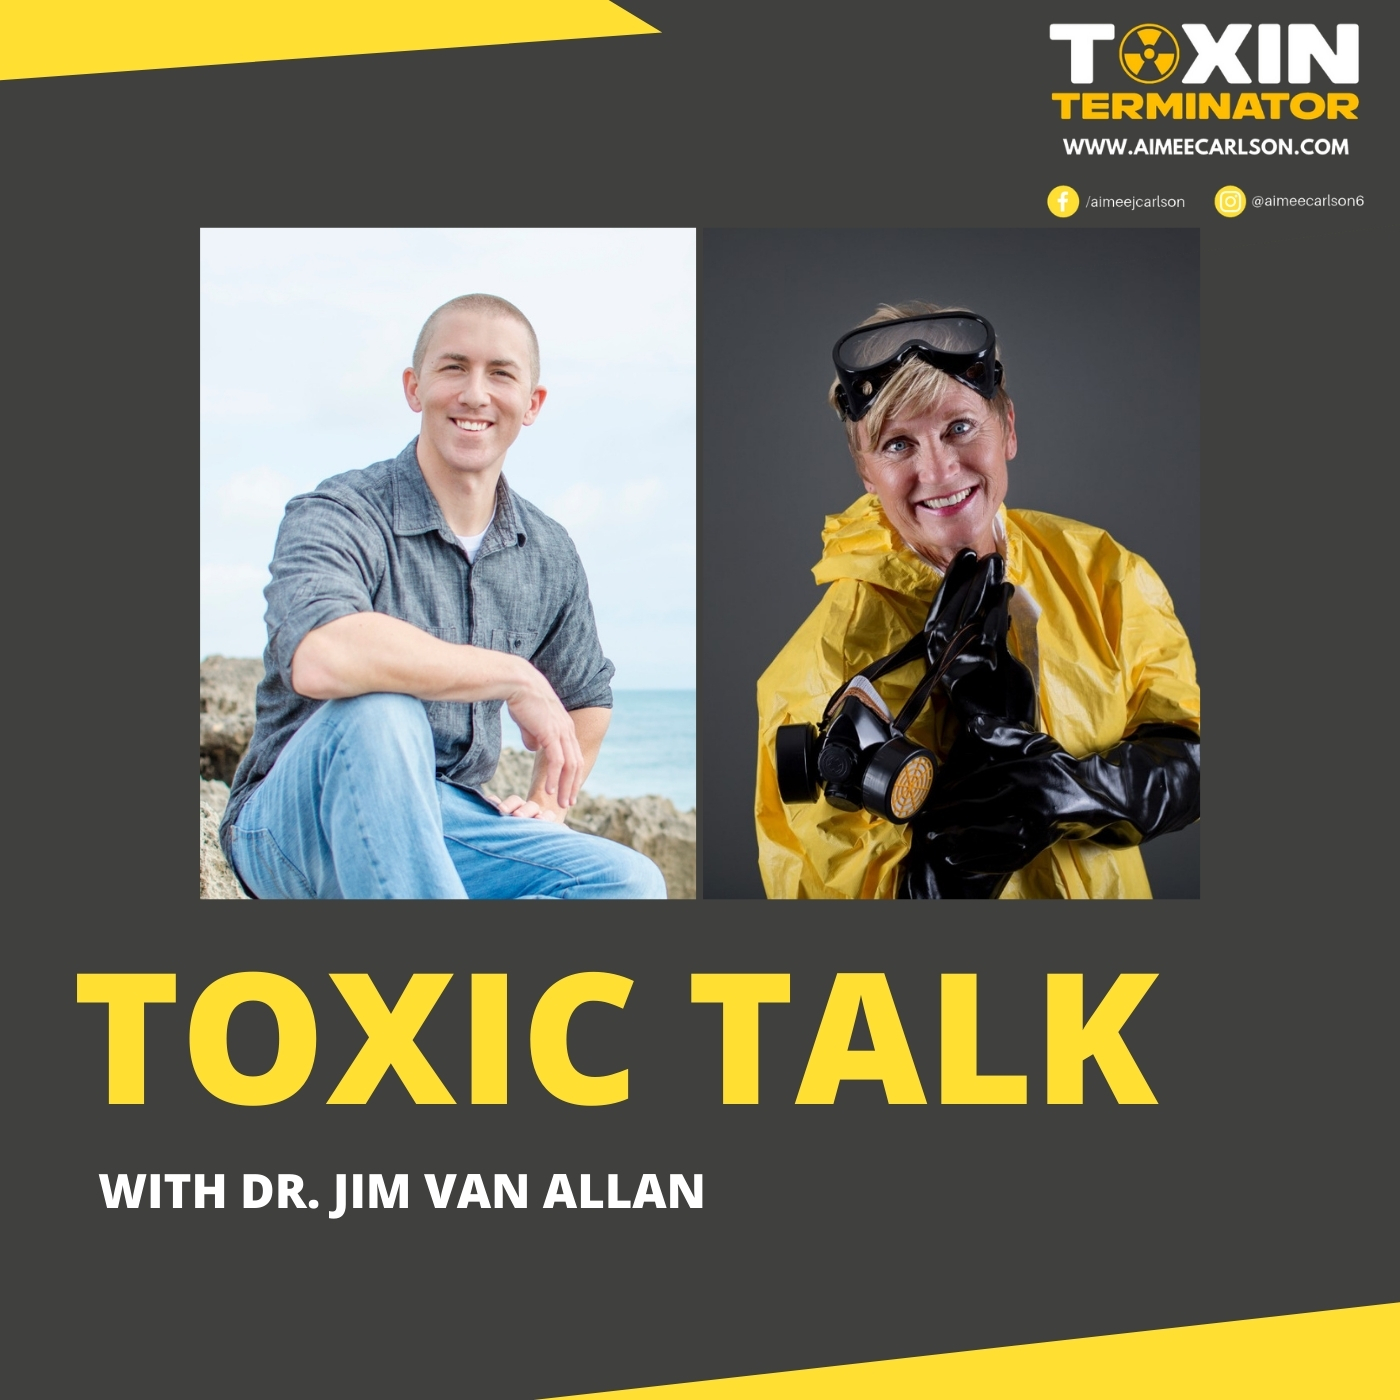 Toxic Talk with Dr. Jim Van Allan